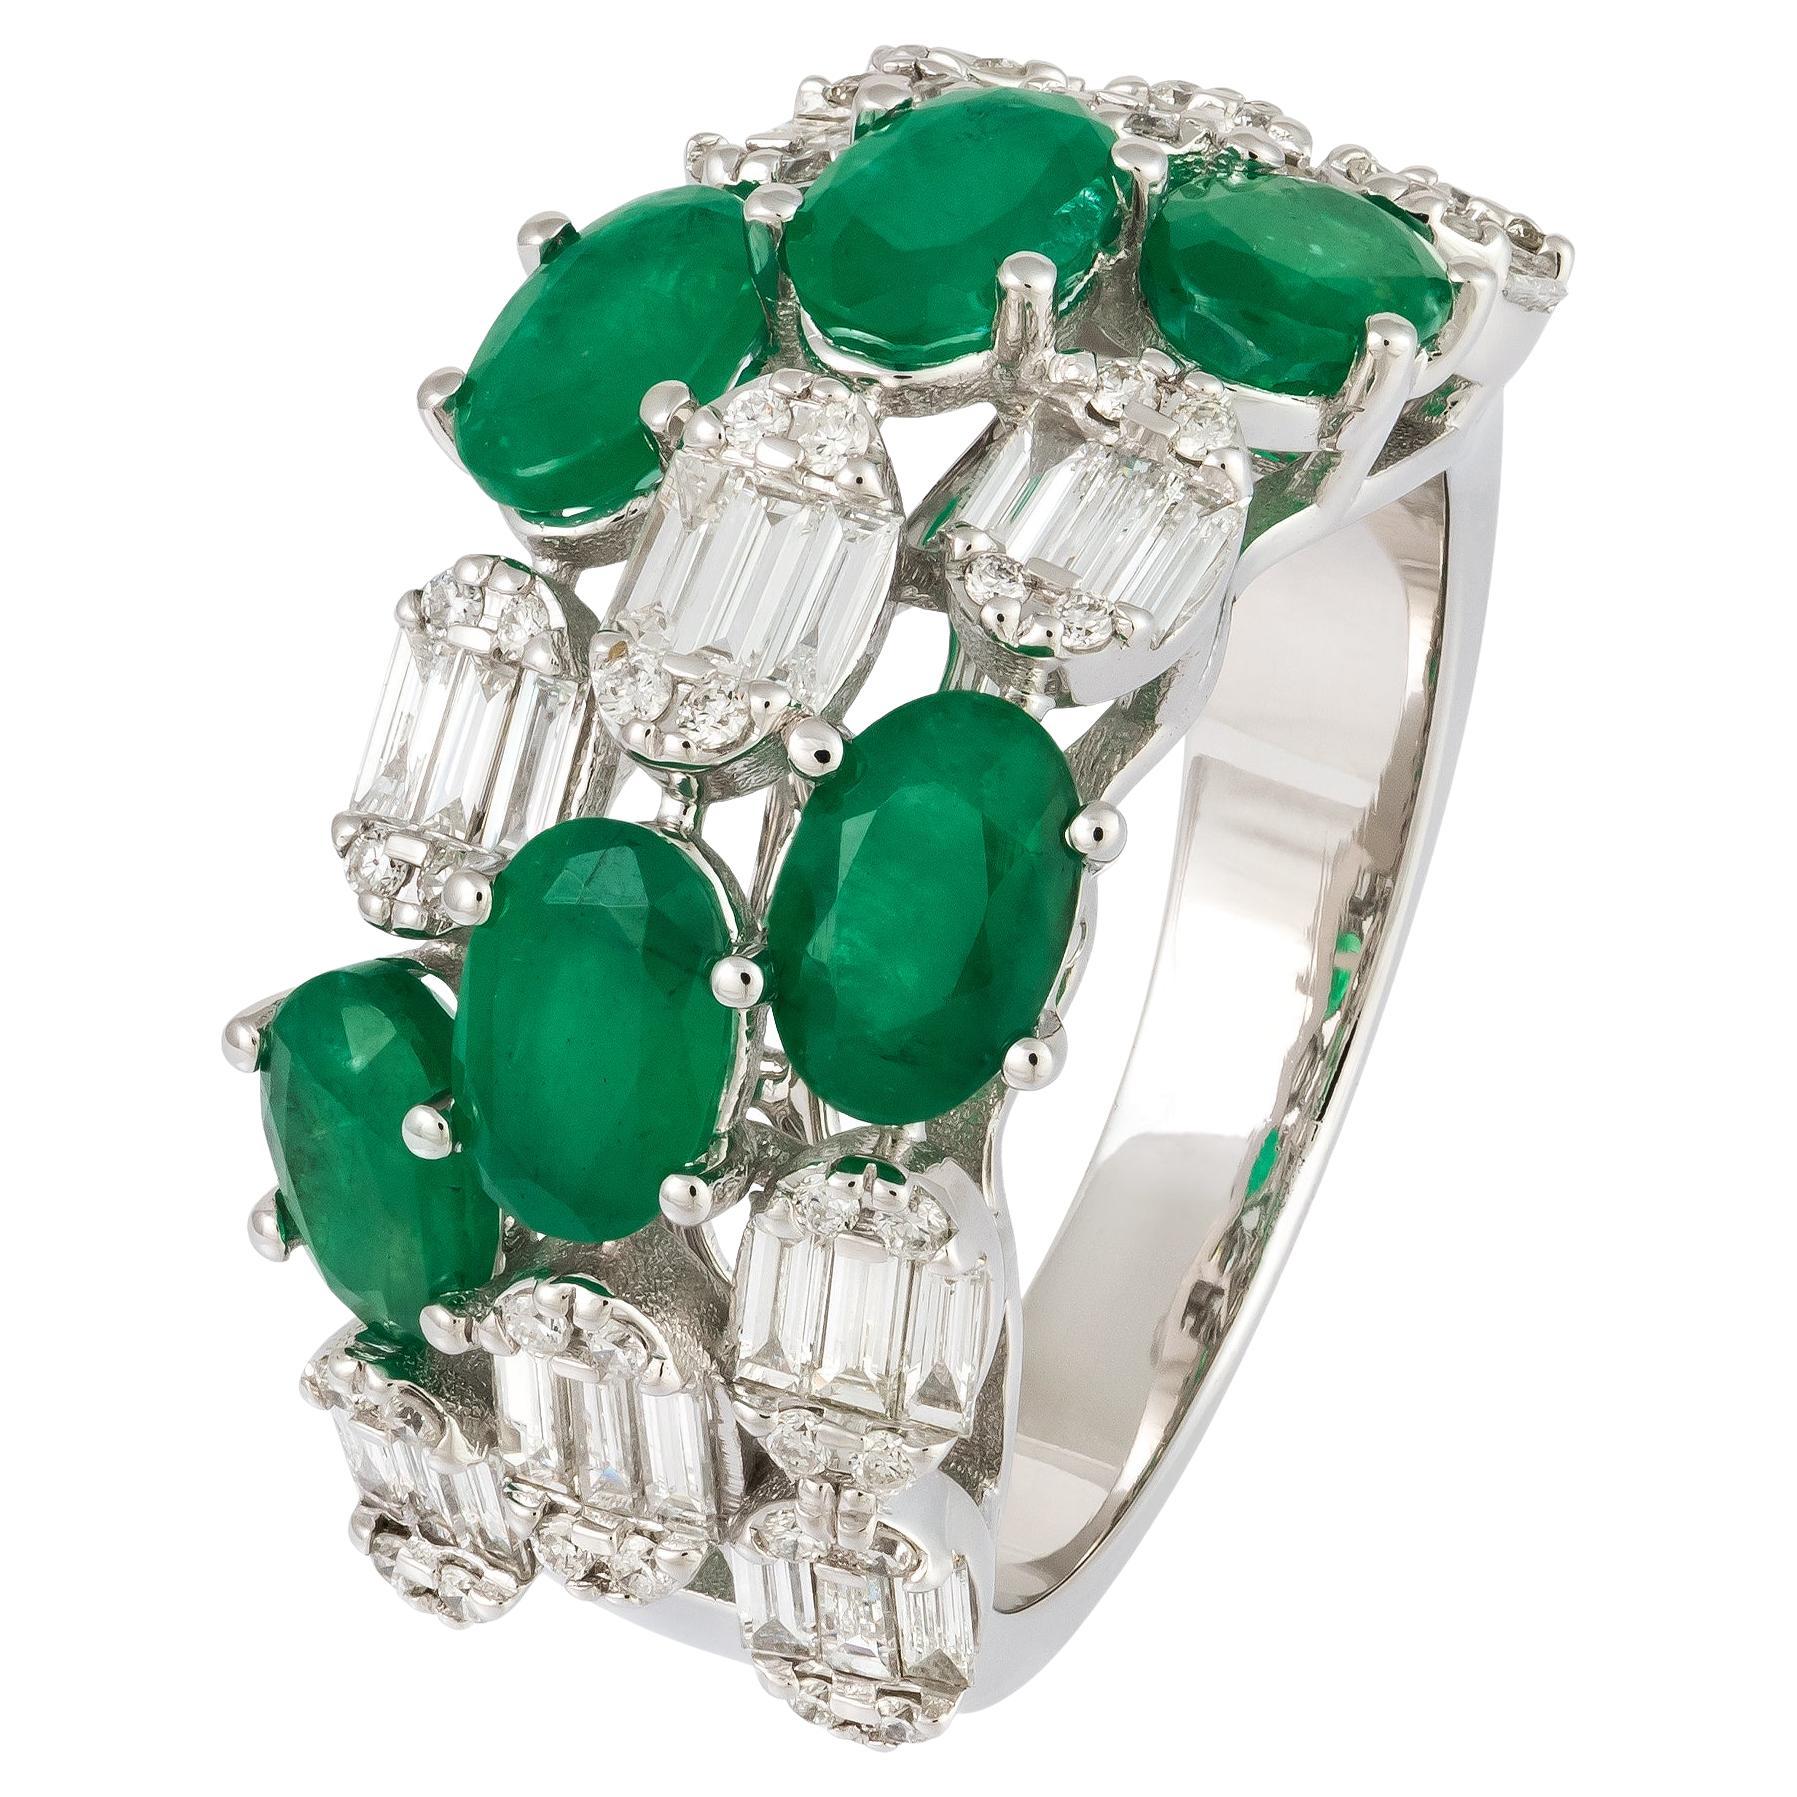 For Sale:  Impressive Emerald White 18K Gold White Diamond Ring for Her